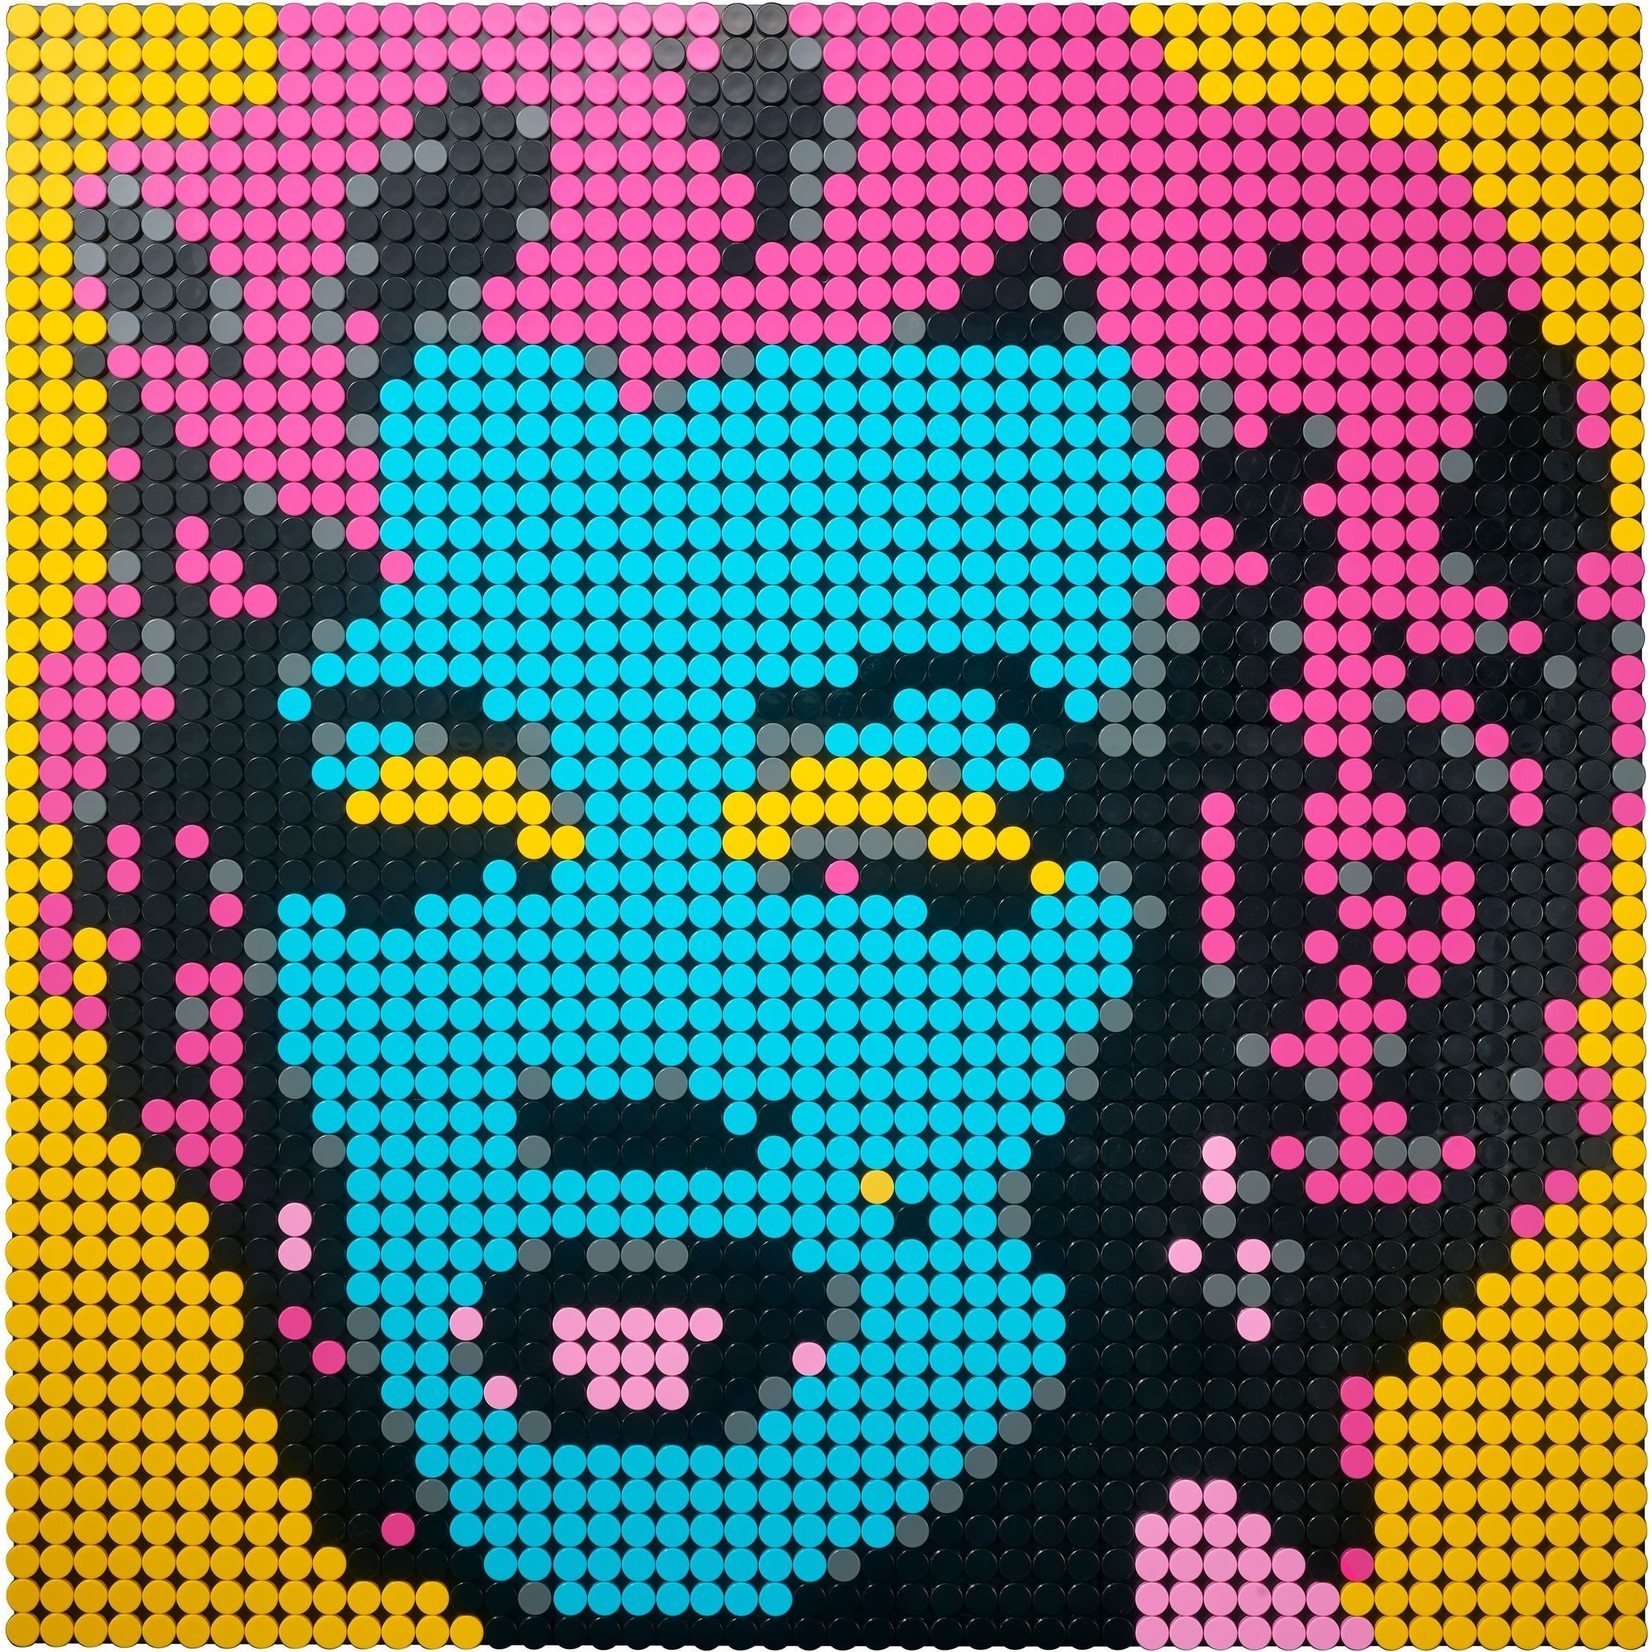 LEGO Andy Warhol's Marilyn Monroe 31197